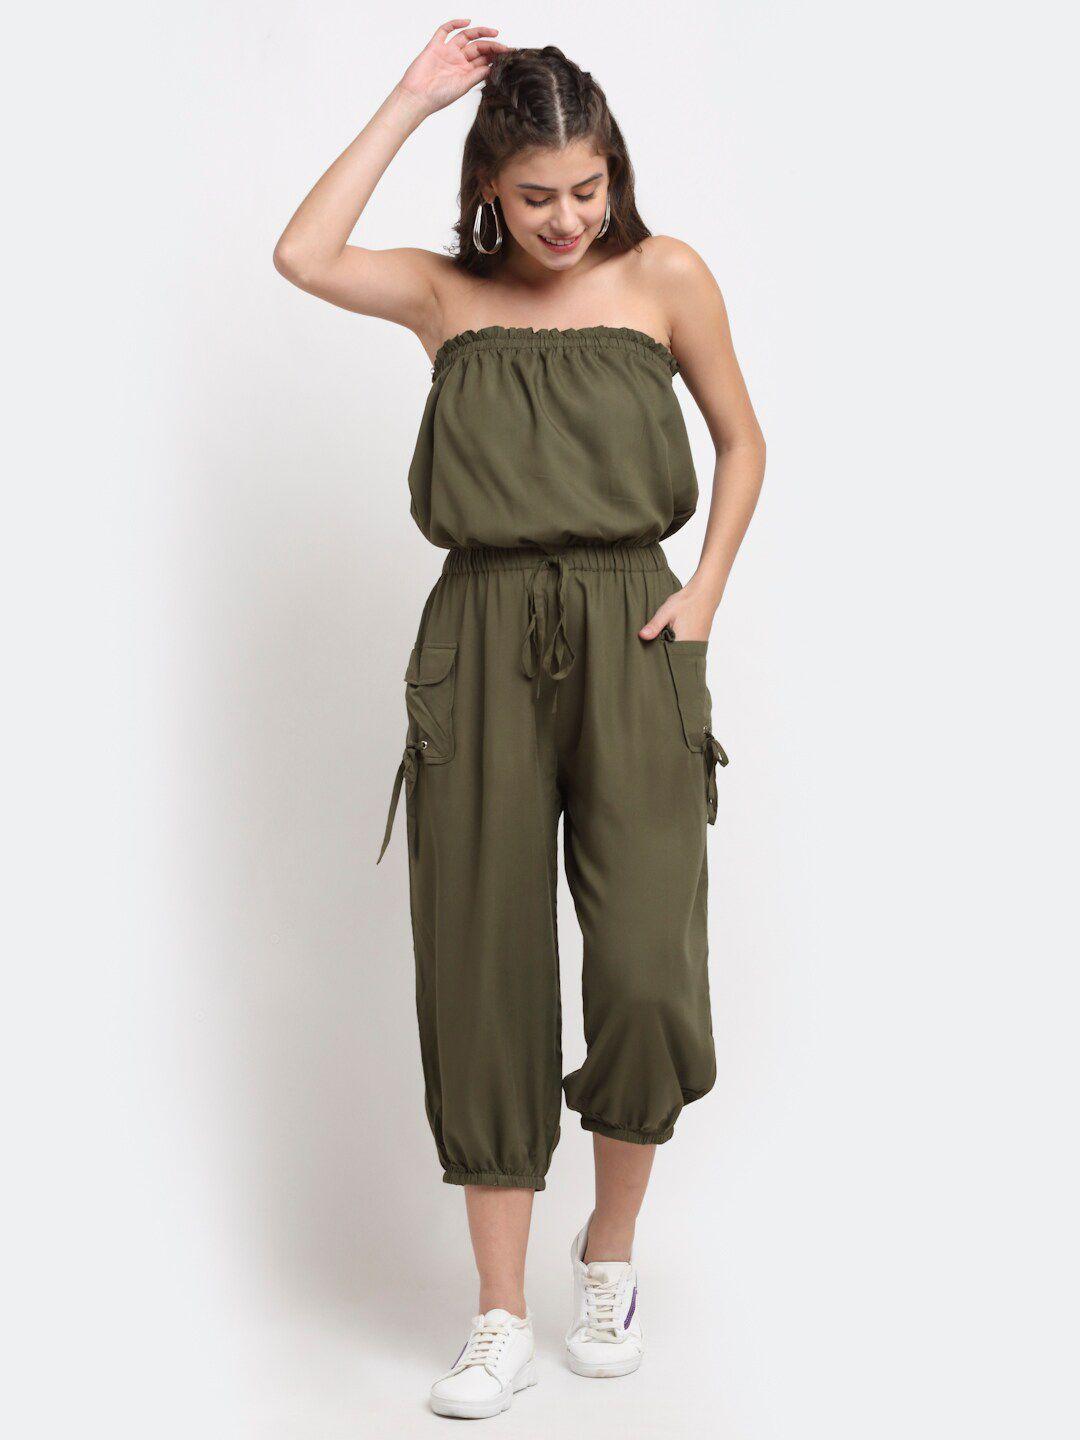 neudis women olive green solid basic jumpsuit